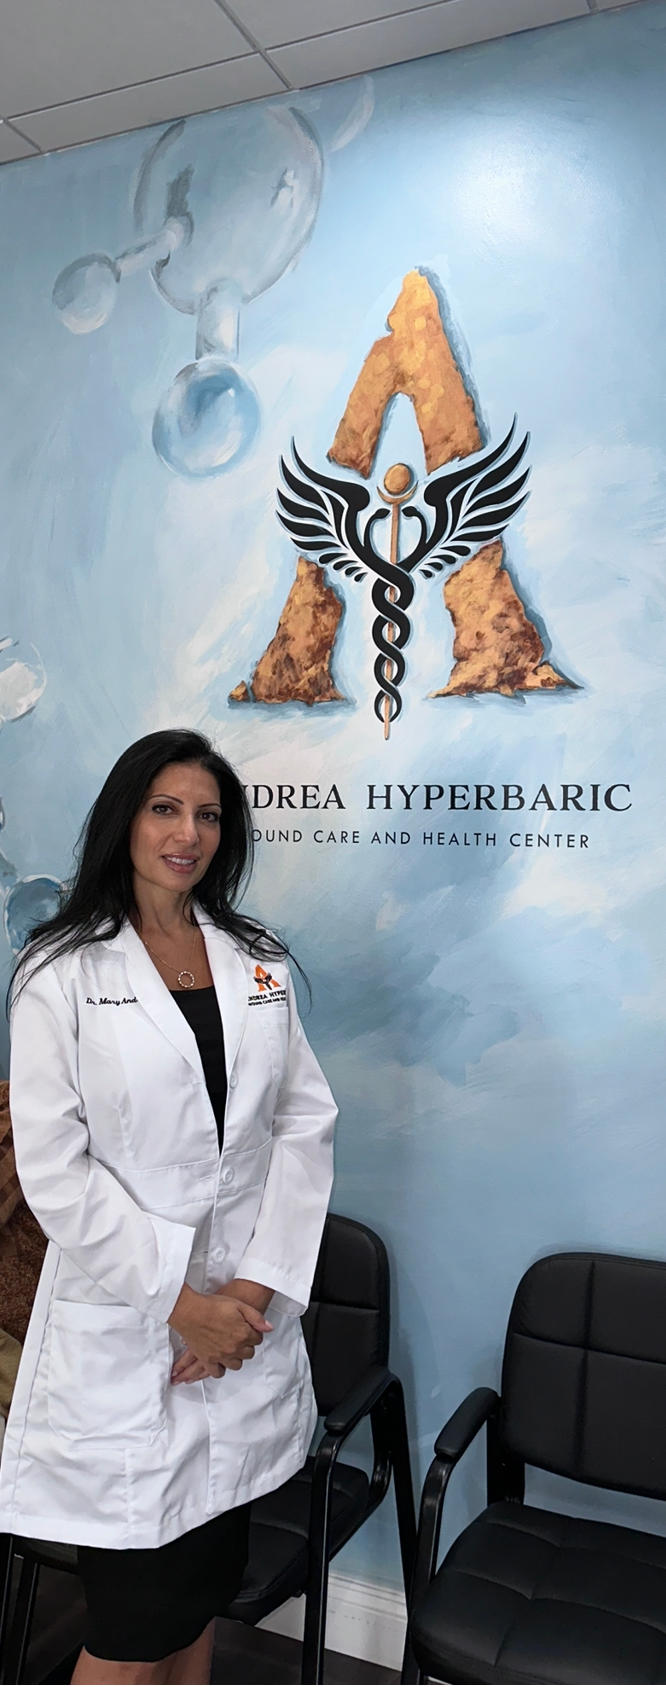 Podiatrist Mary Andrea of Andrea Hyperbaric Wound Care & Podiatry Center